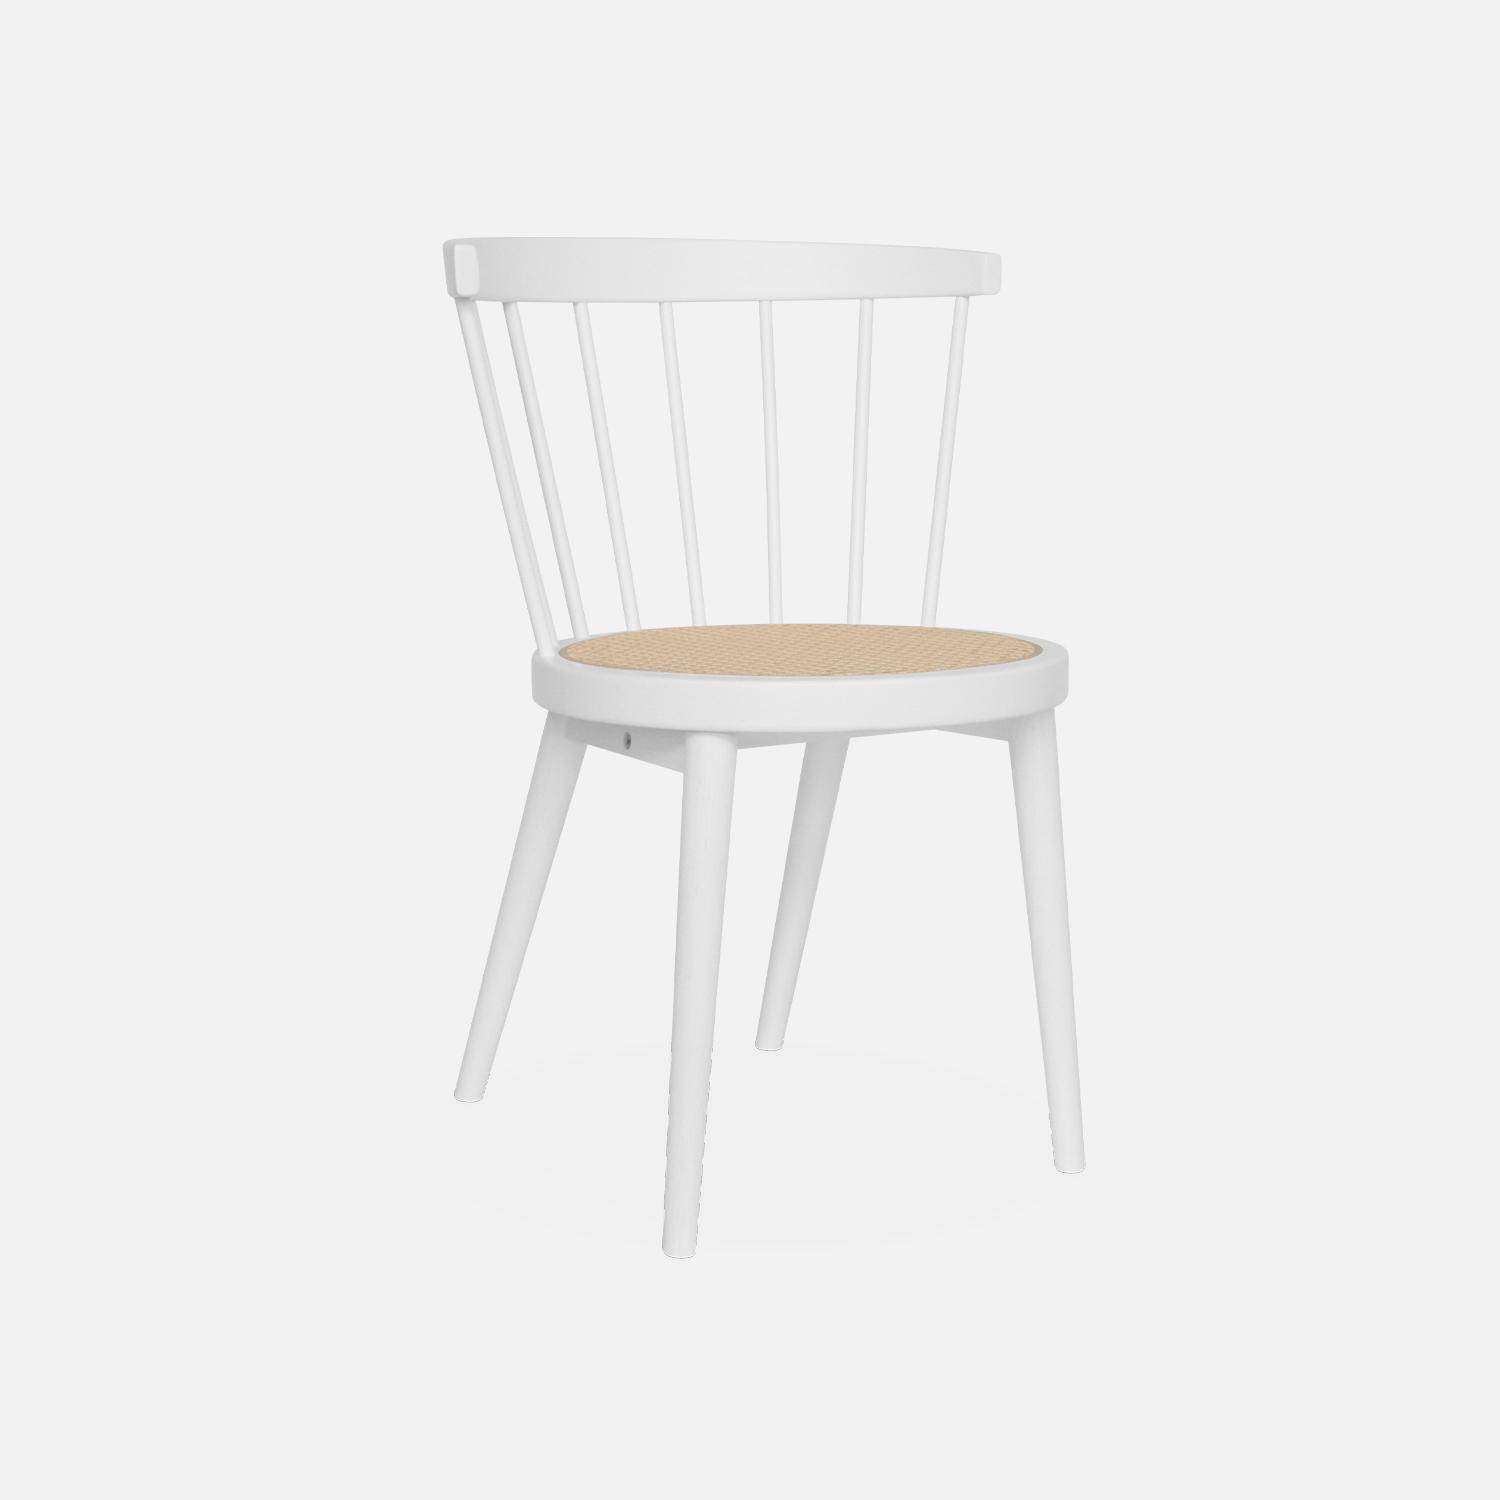 Pair of  Wood and Cane Chairs, Bohemian Spirit, White, L53 x W53.5 x H 6 cm,sweeek,Photo4